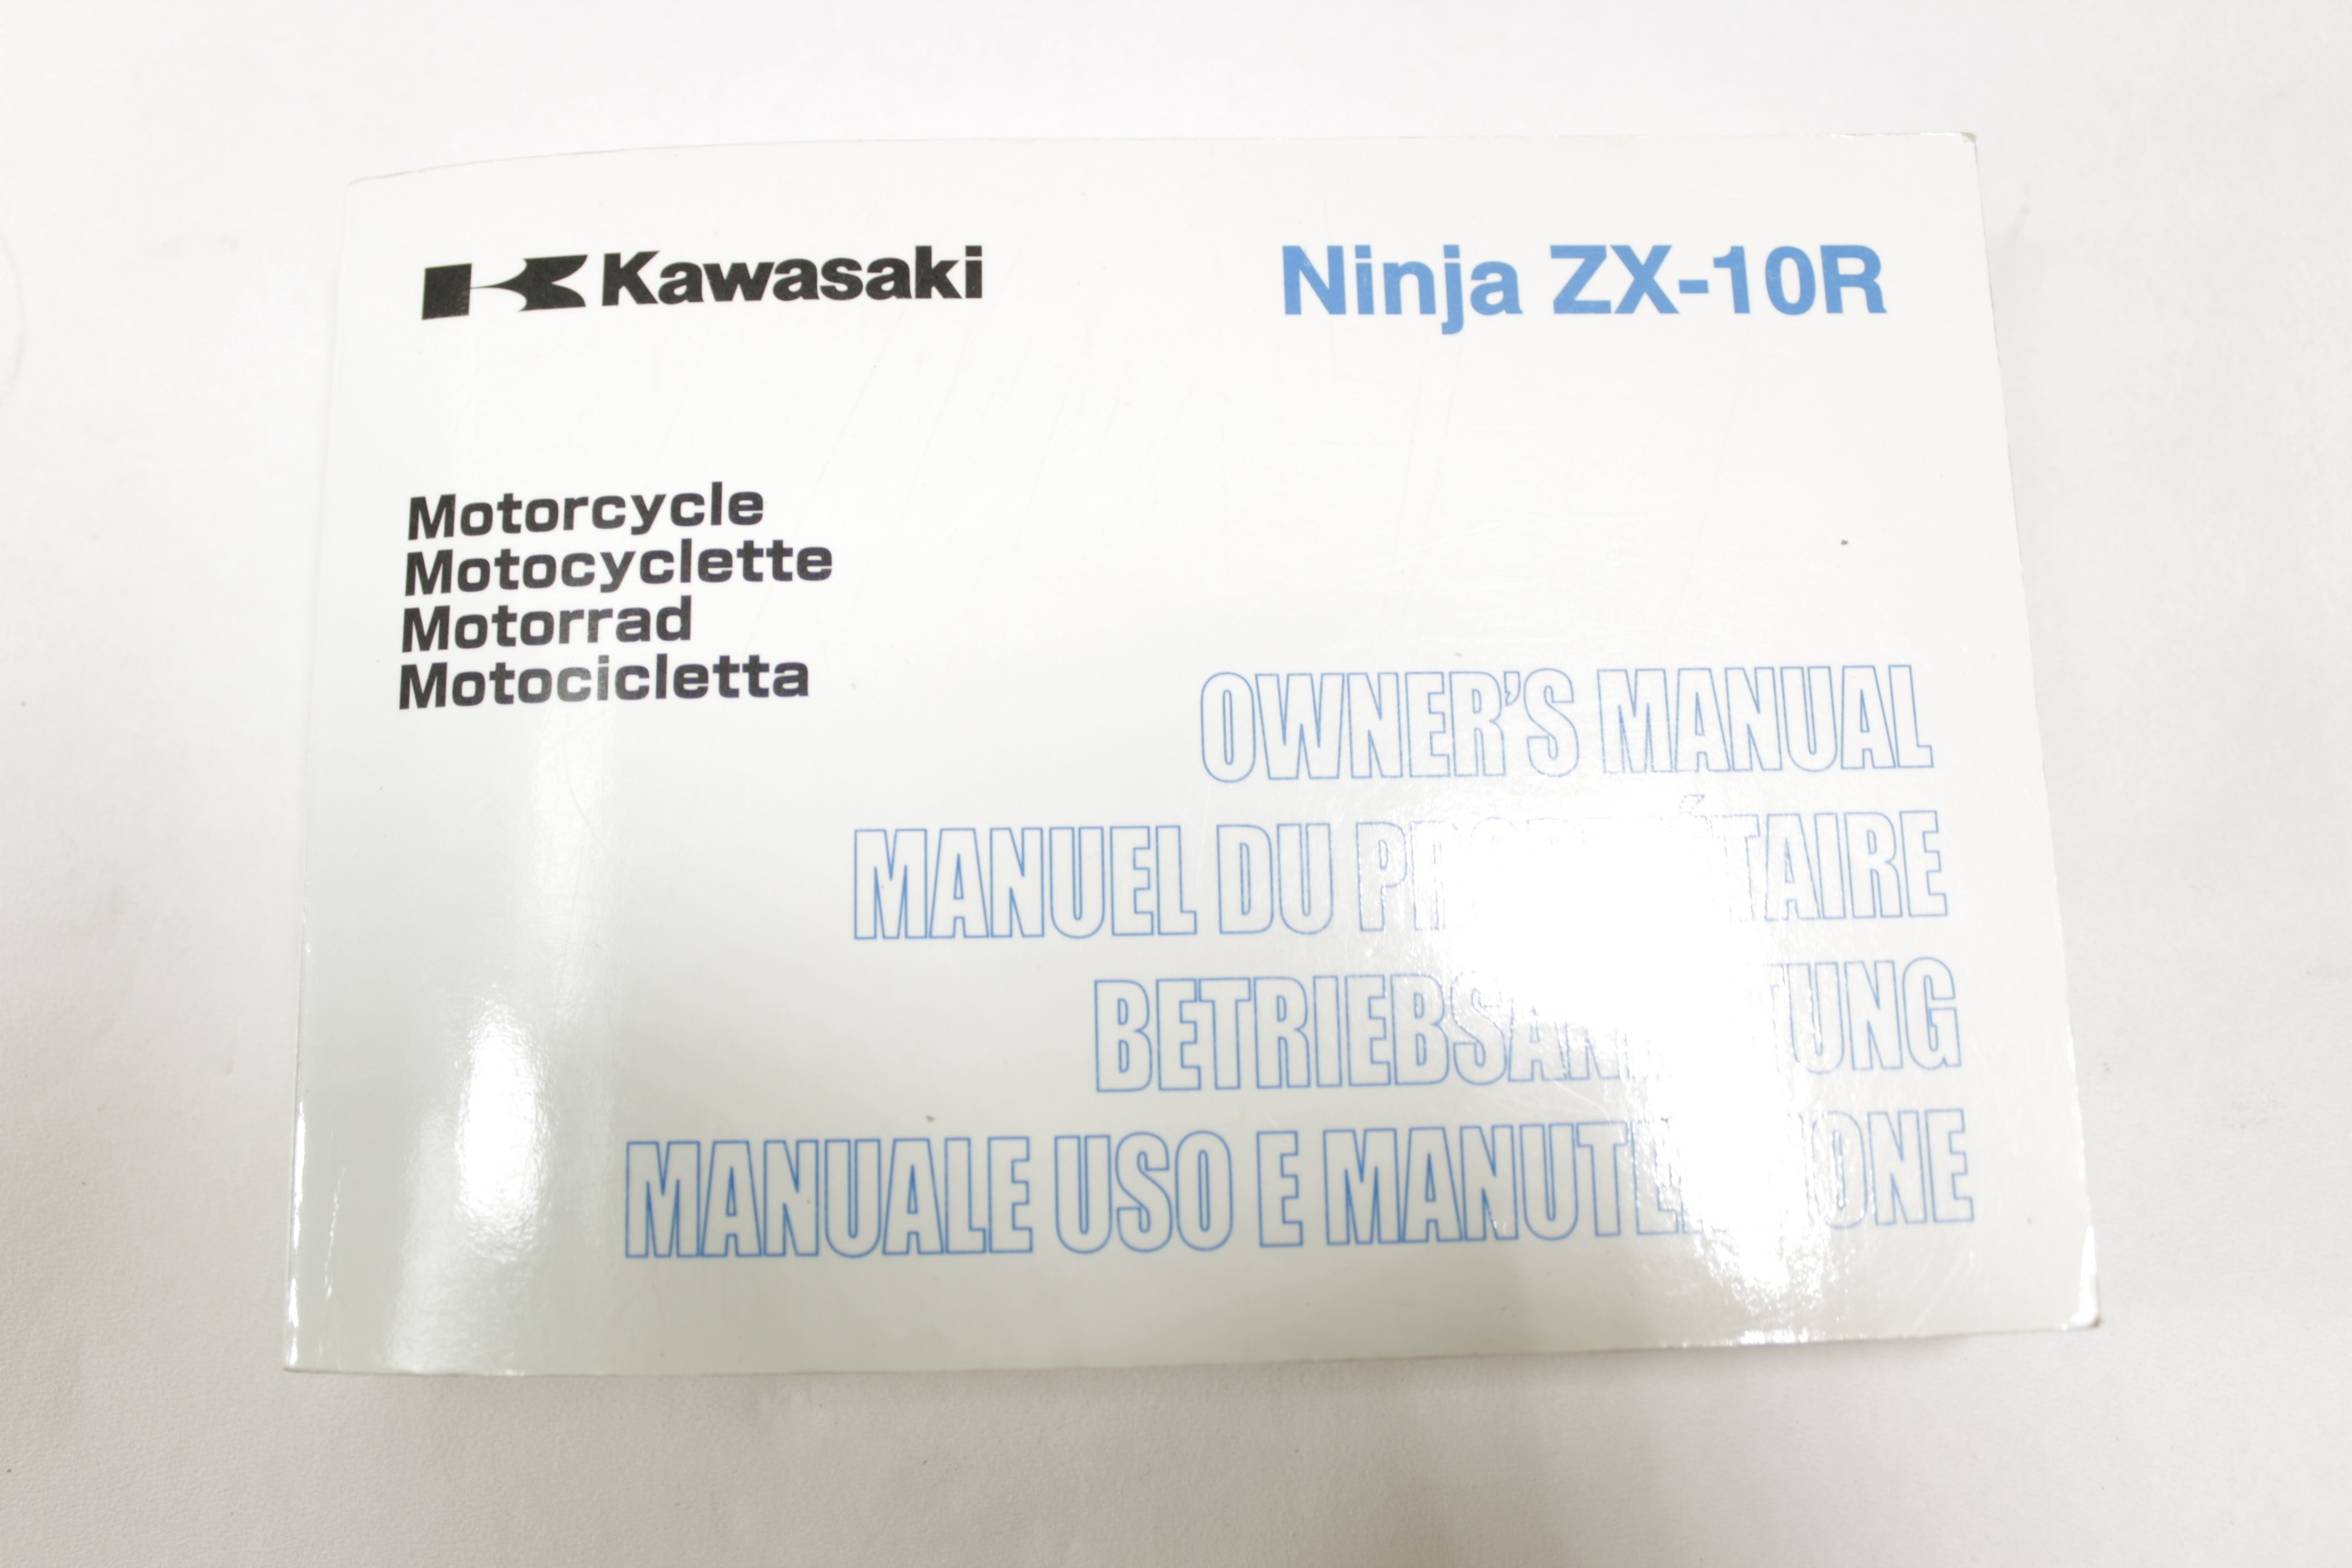 MANUALE USO E MANUTENZIONE 4 LINGUE KAWASAKI NINJA 1000 ZX-10R 2004 - 2005 999761231 OWNER'S MANUAL